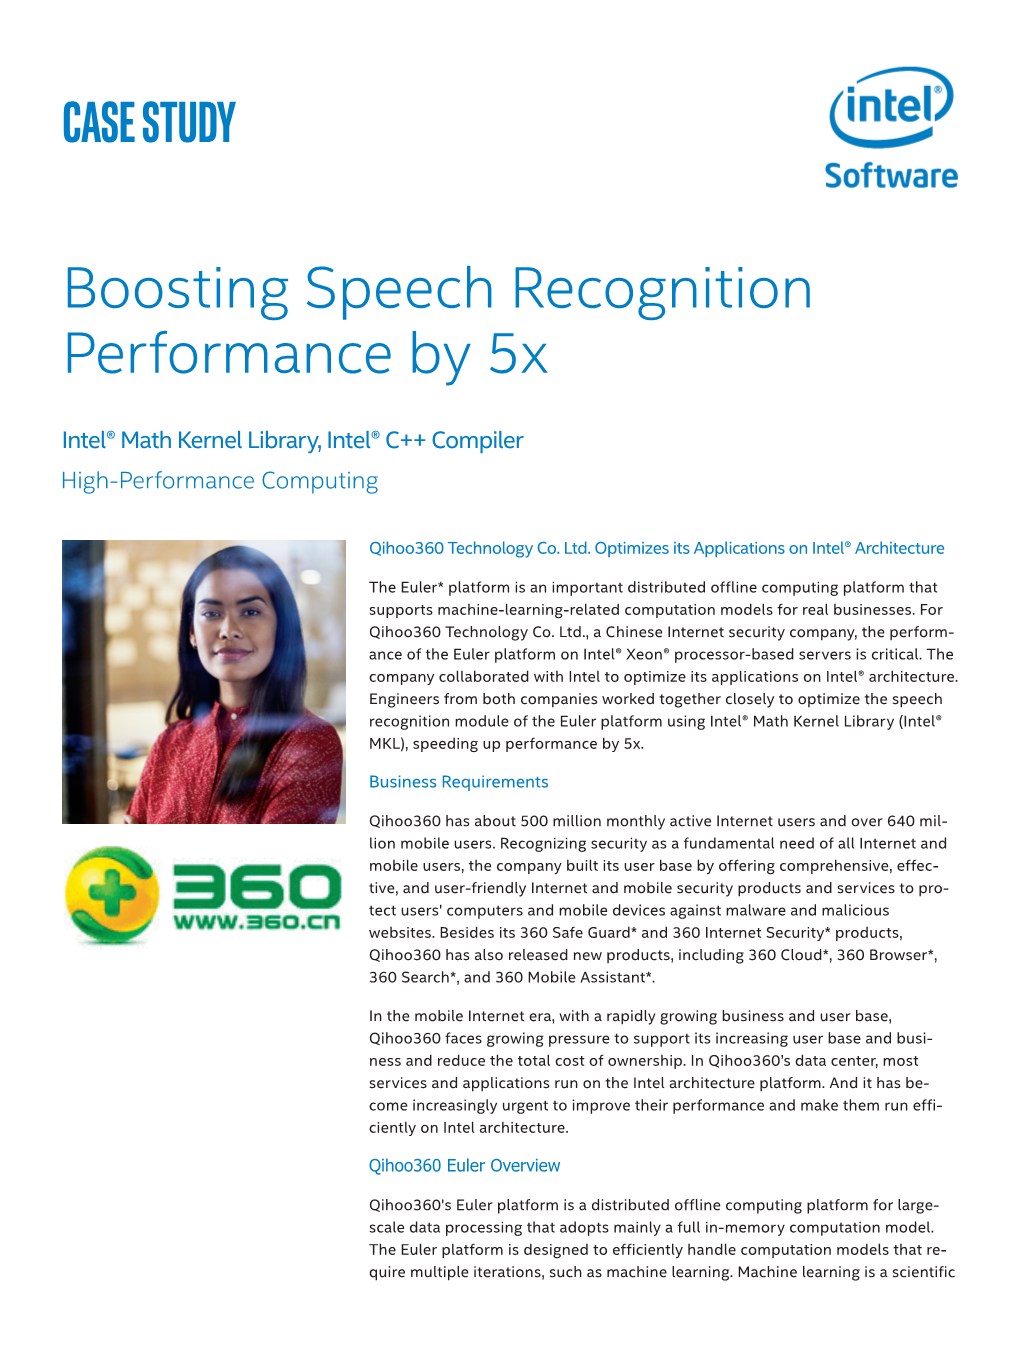 Qihoo360 and Intel® MKL Boost Speech Recognition Performance